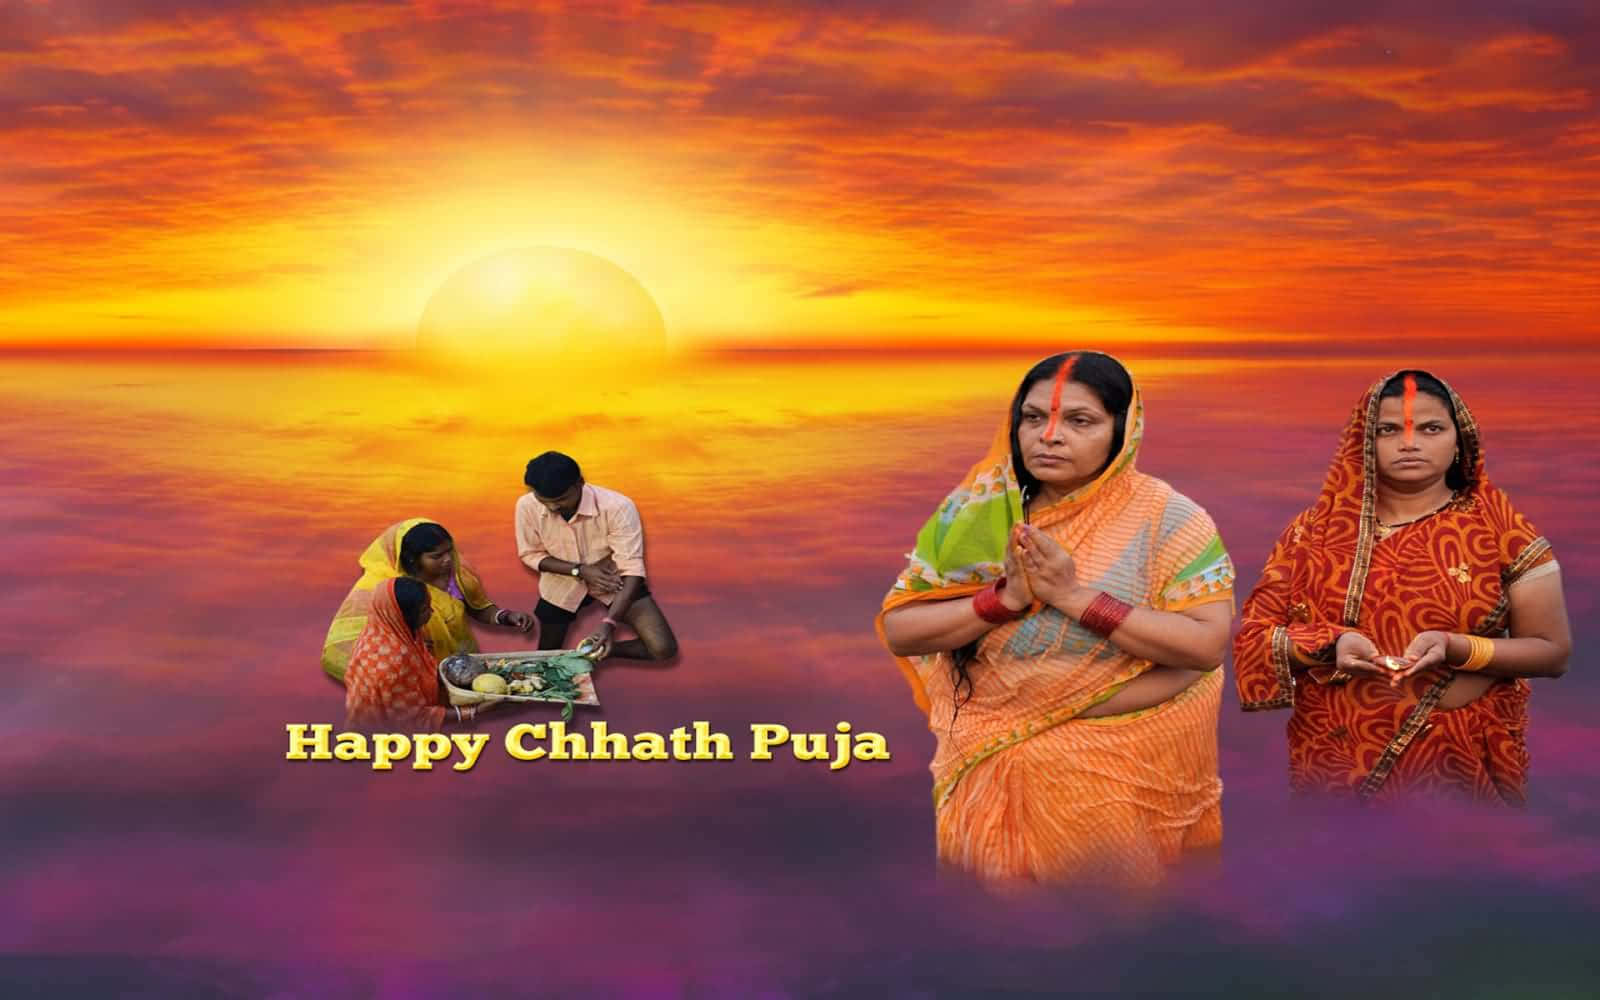 Celebrating the Festival of Chhath Puja